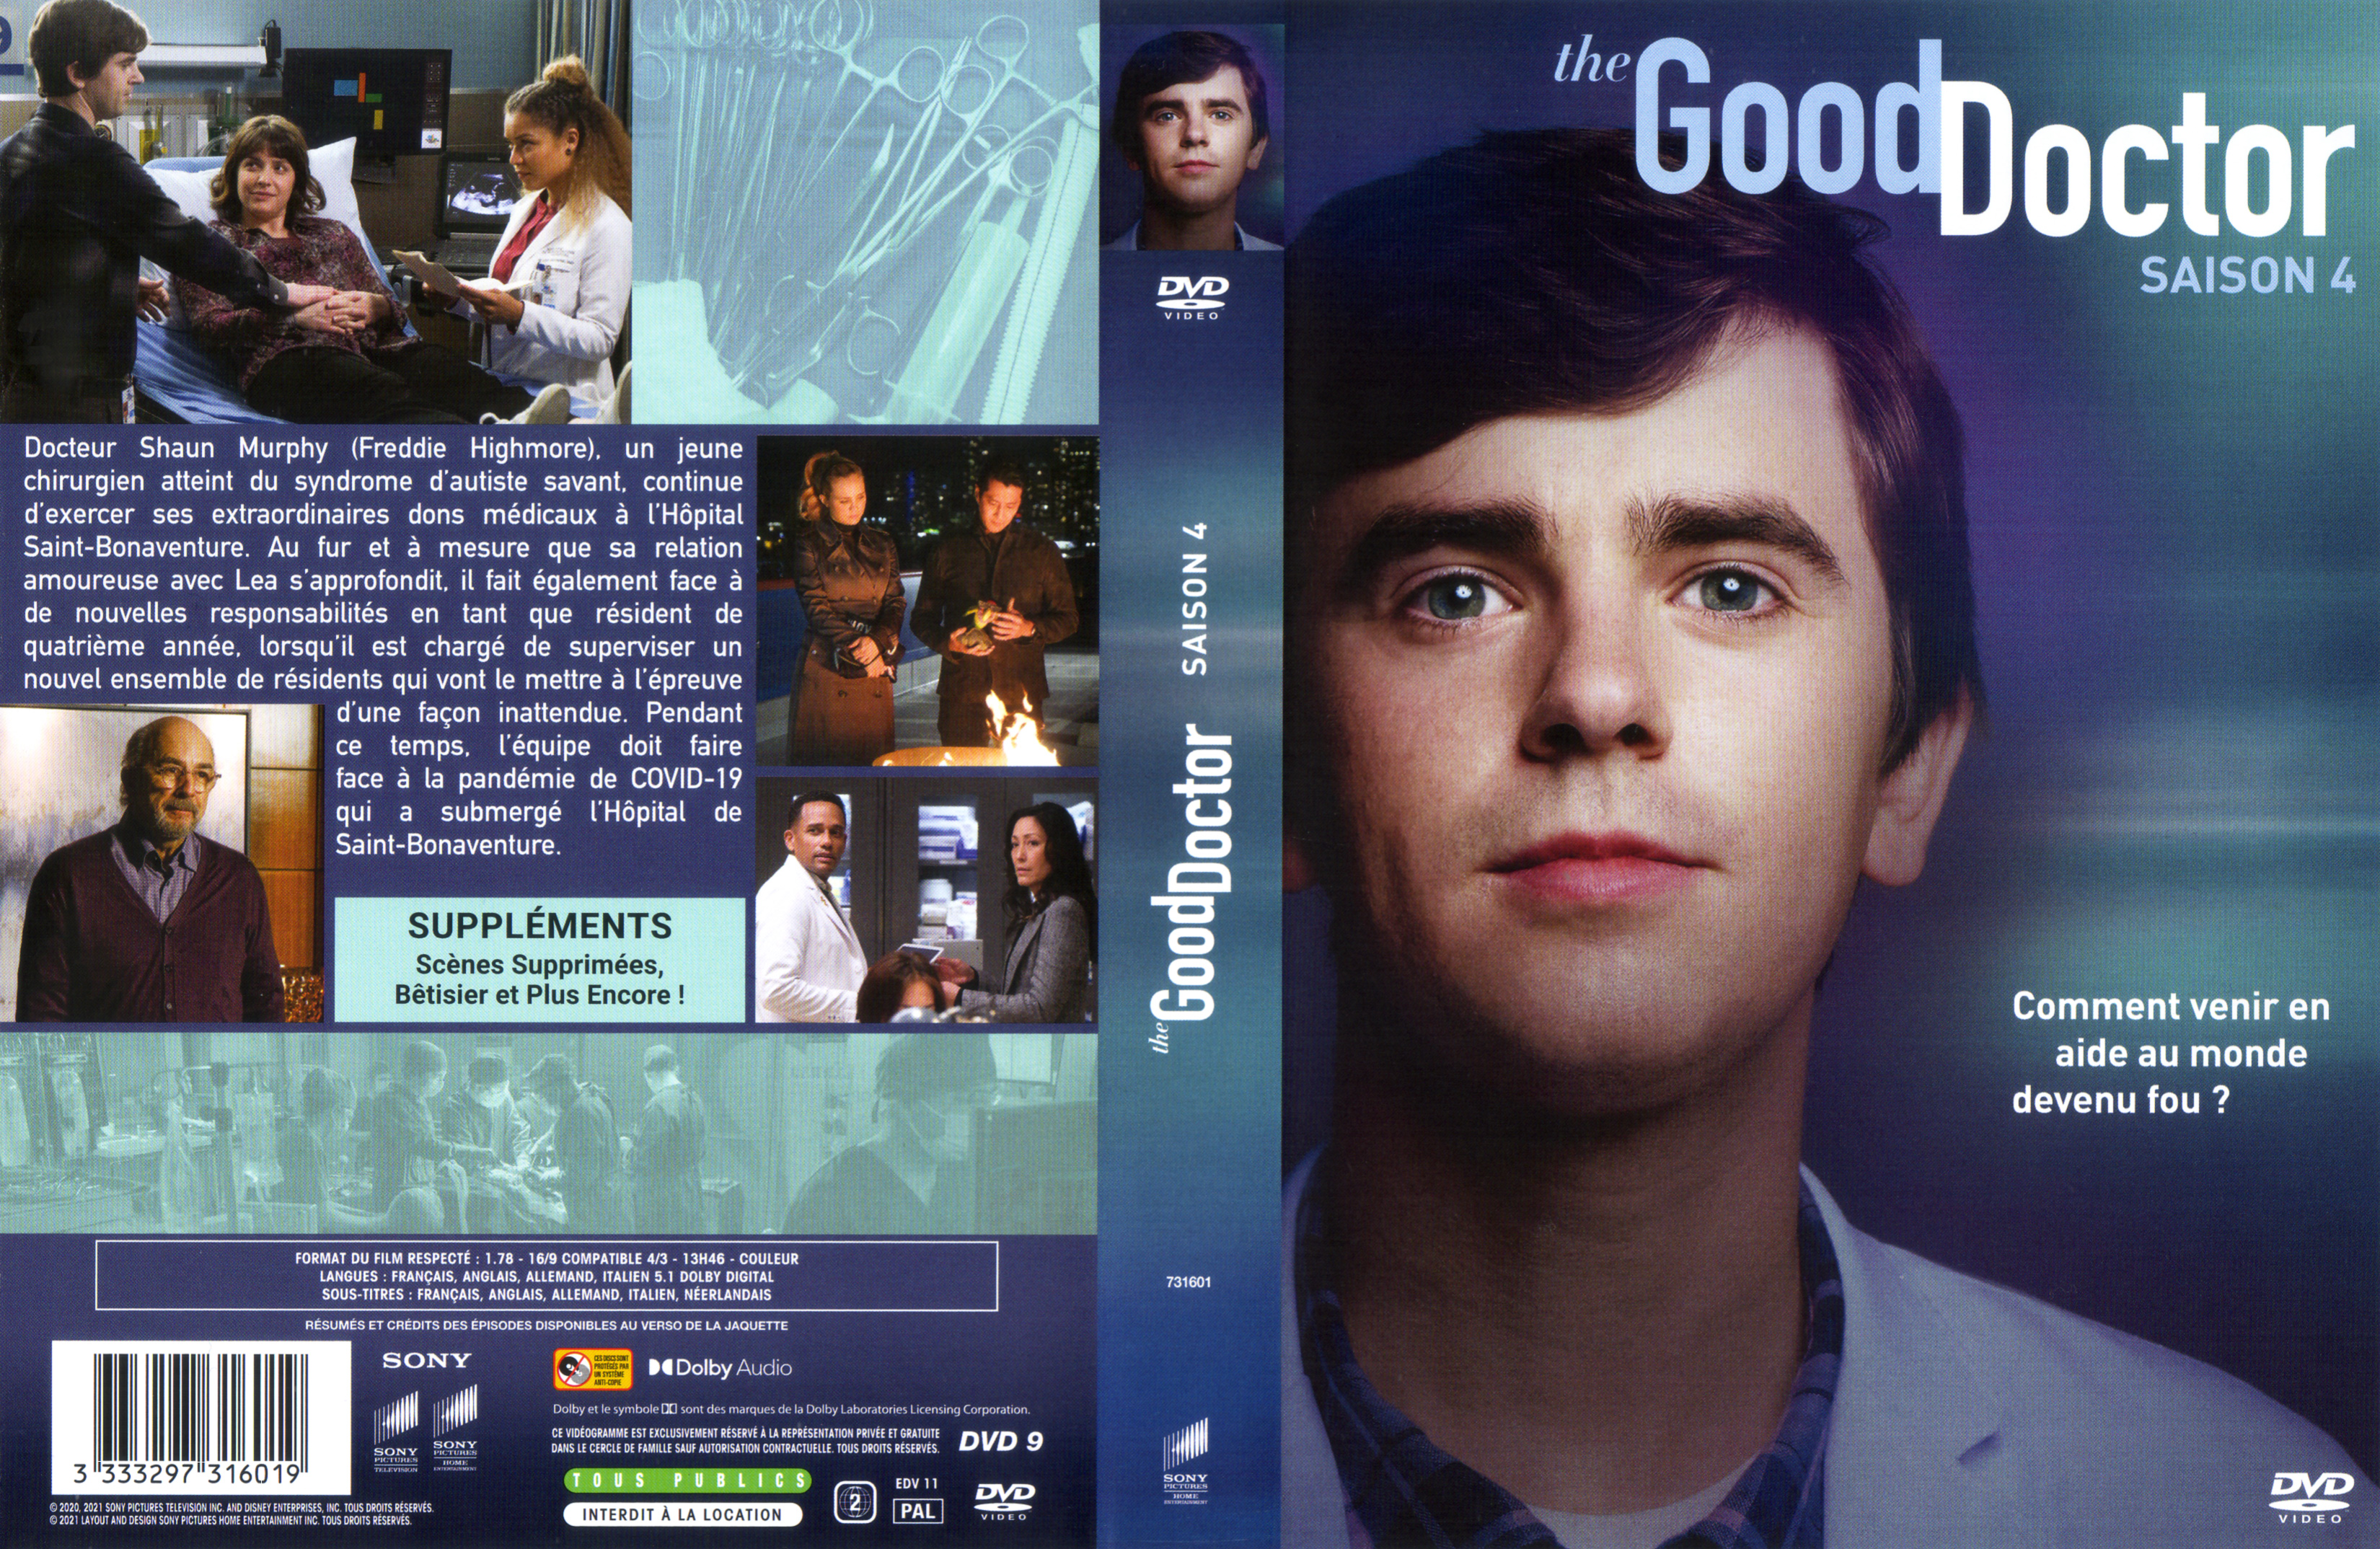 Jaquette DVD The good Doctor Saison 4